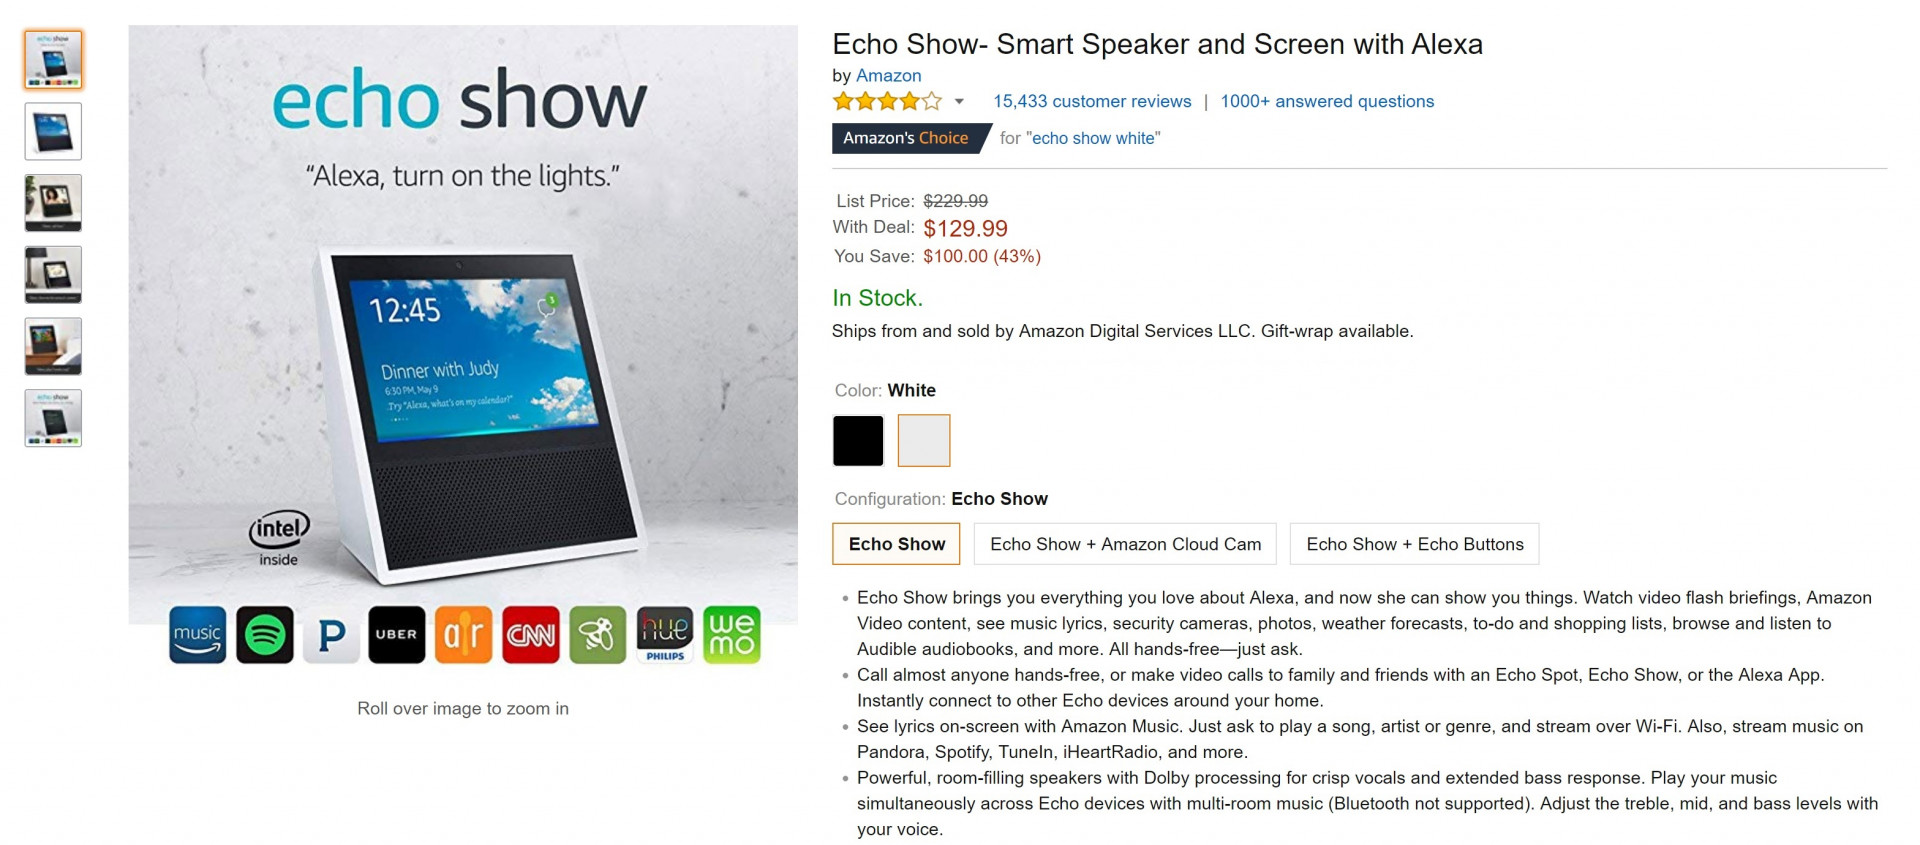 The Amazon Echo Show store page on Amazon